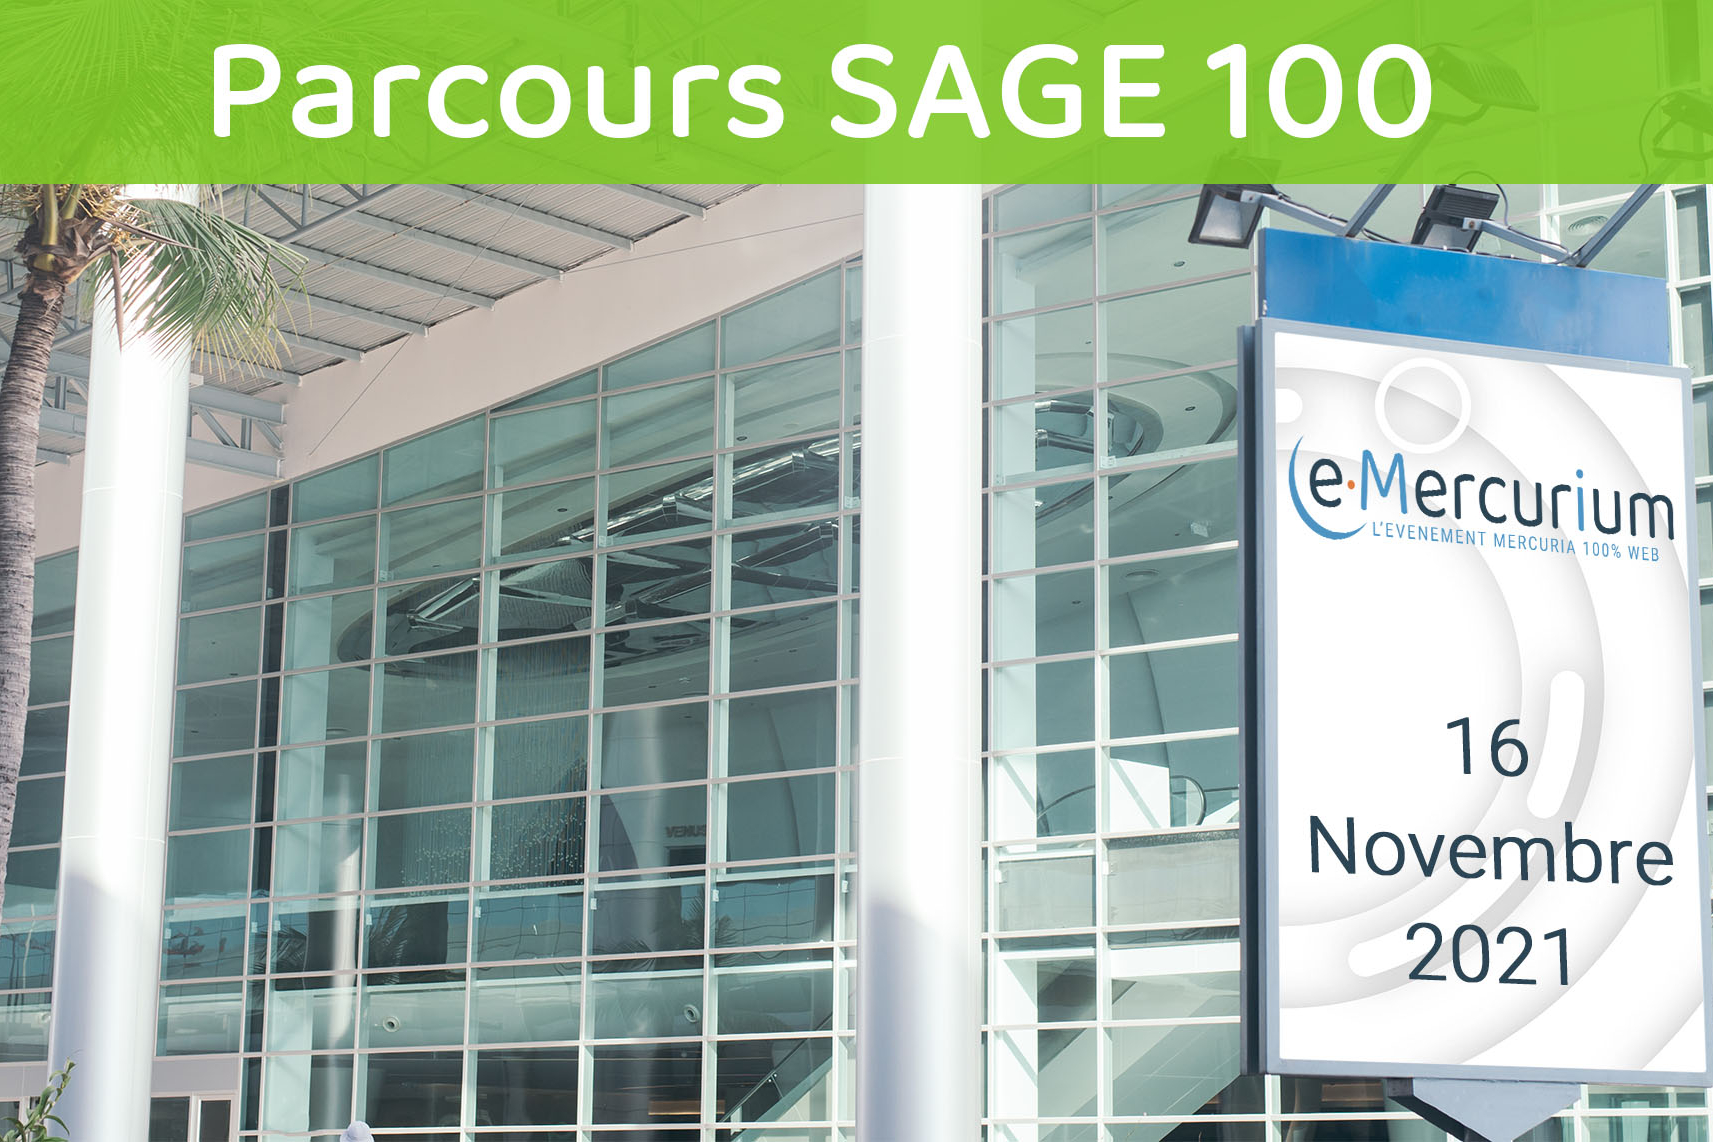 Mercuria : e-Mercurium 2021 - Parcours Sage 100